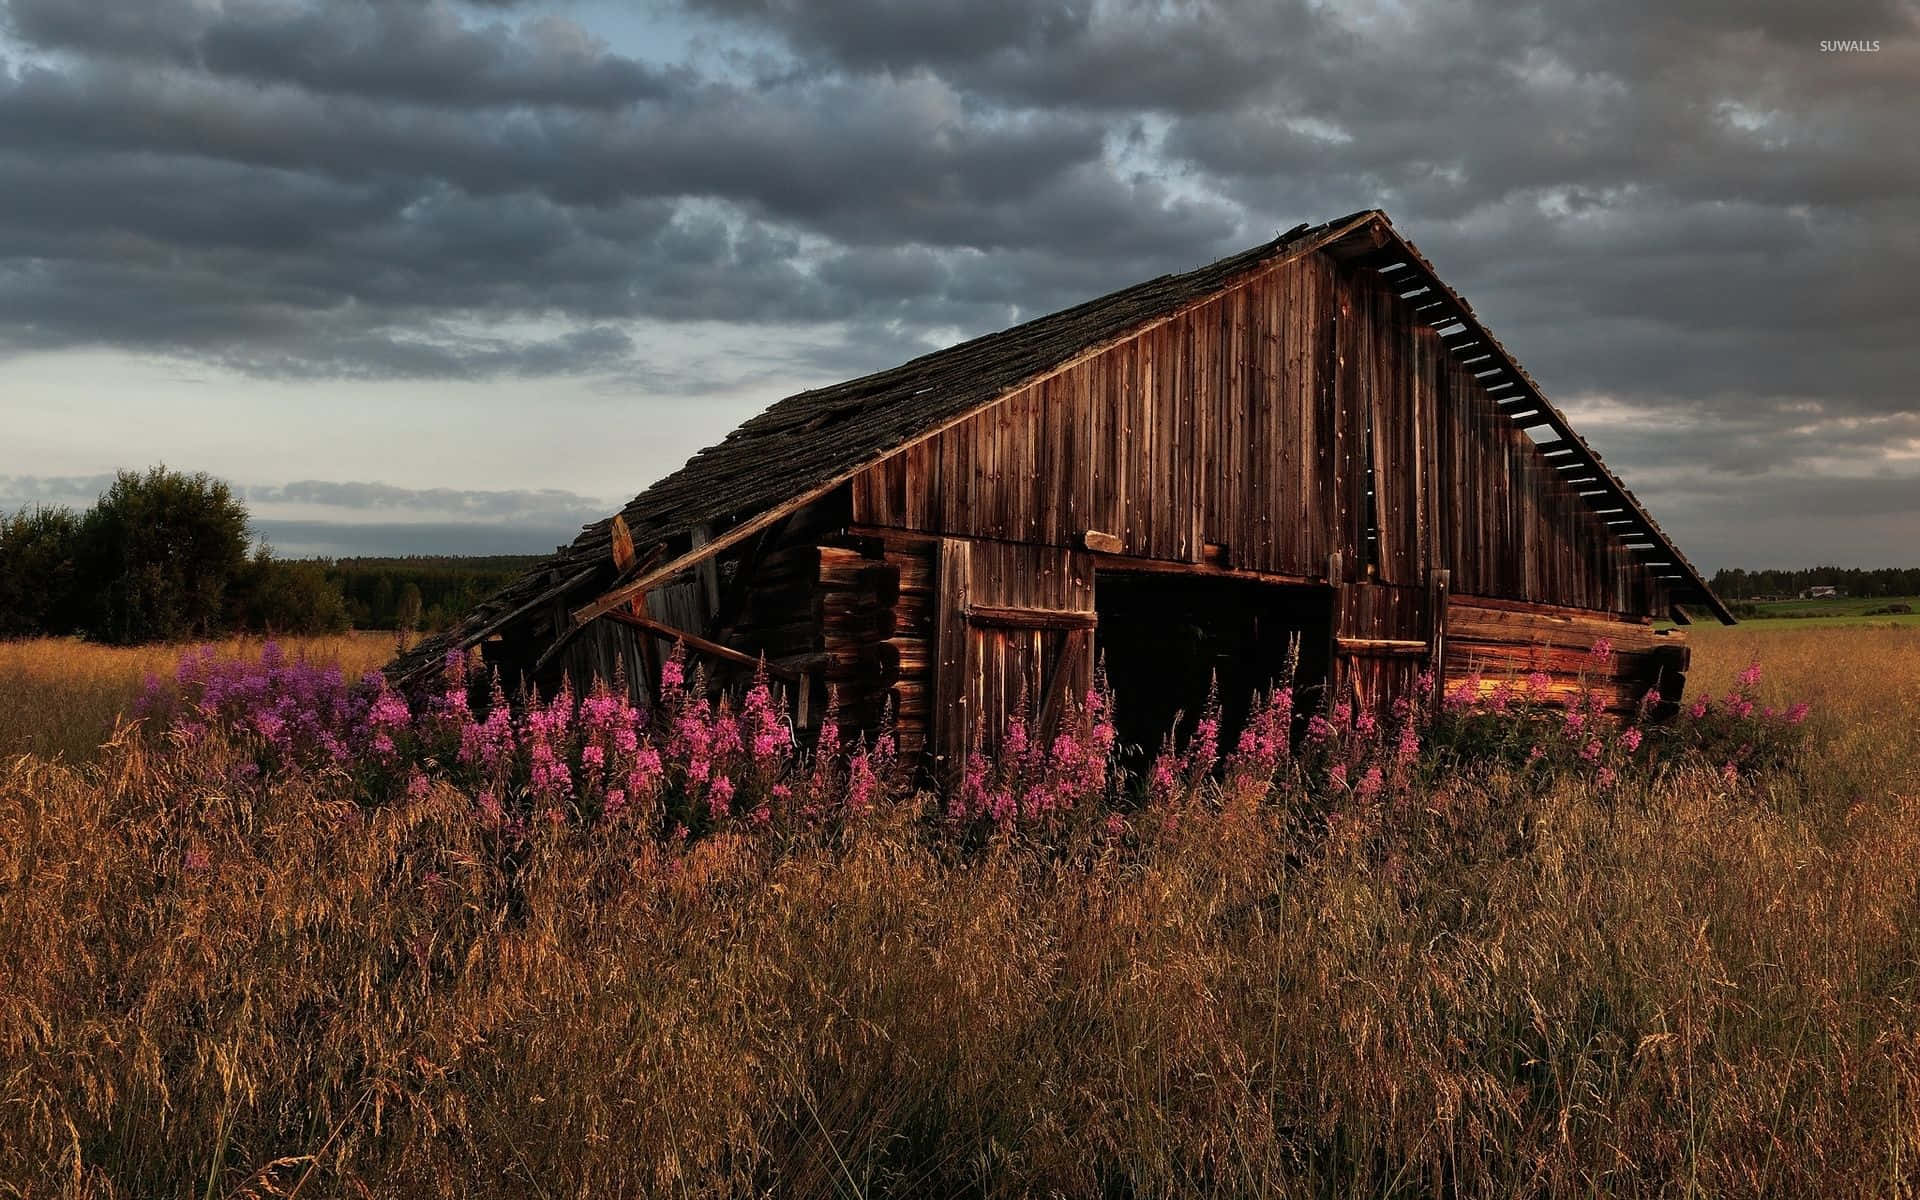 A rustic red barn in rural landscape